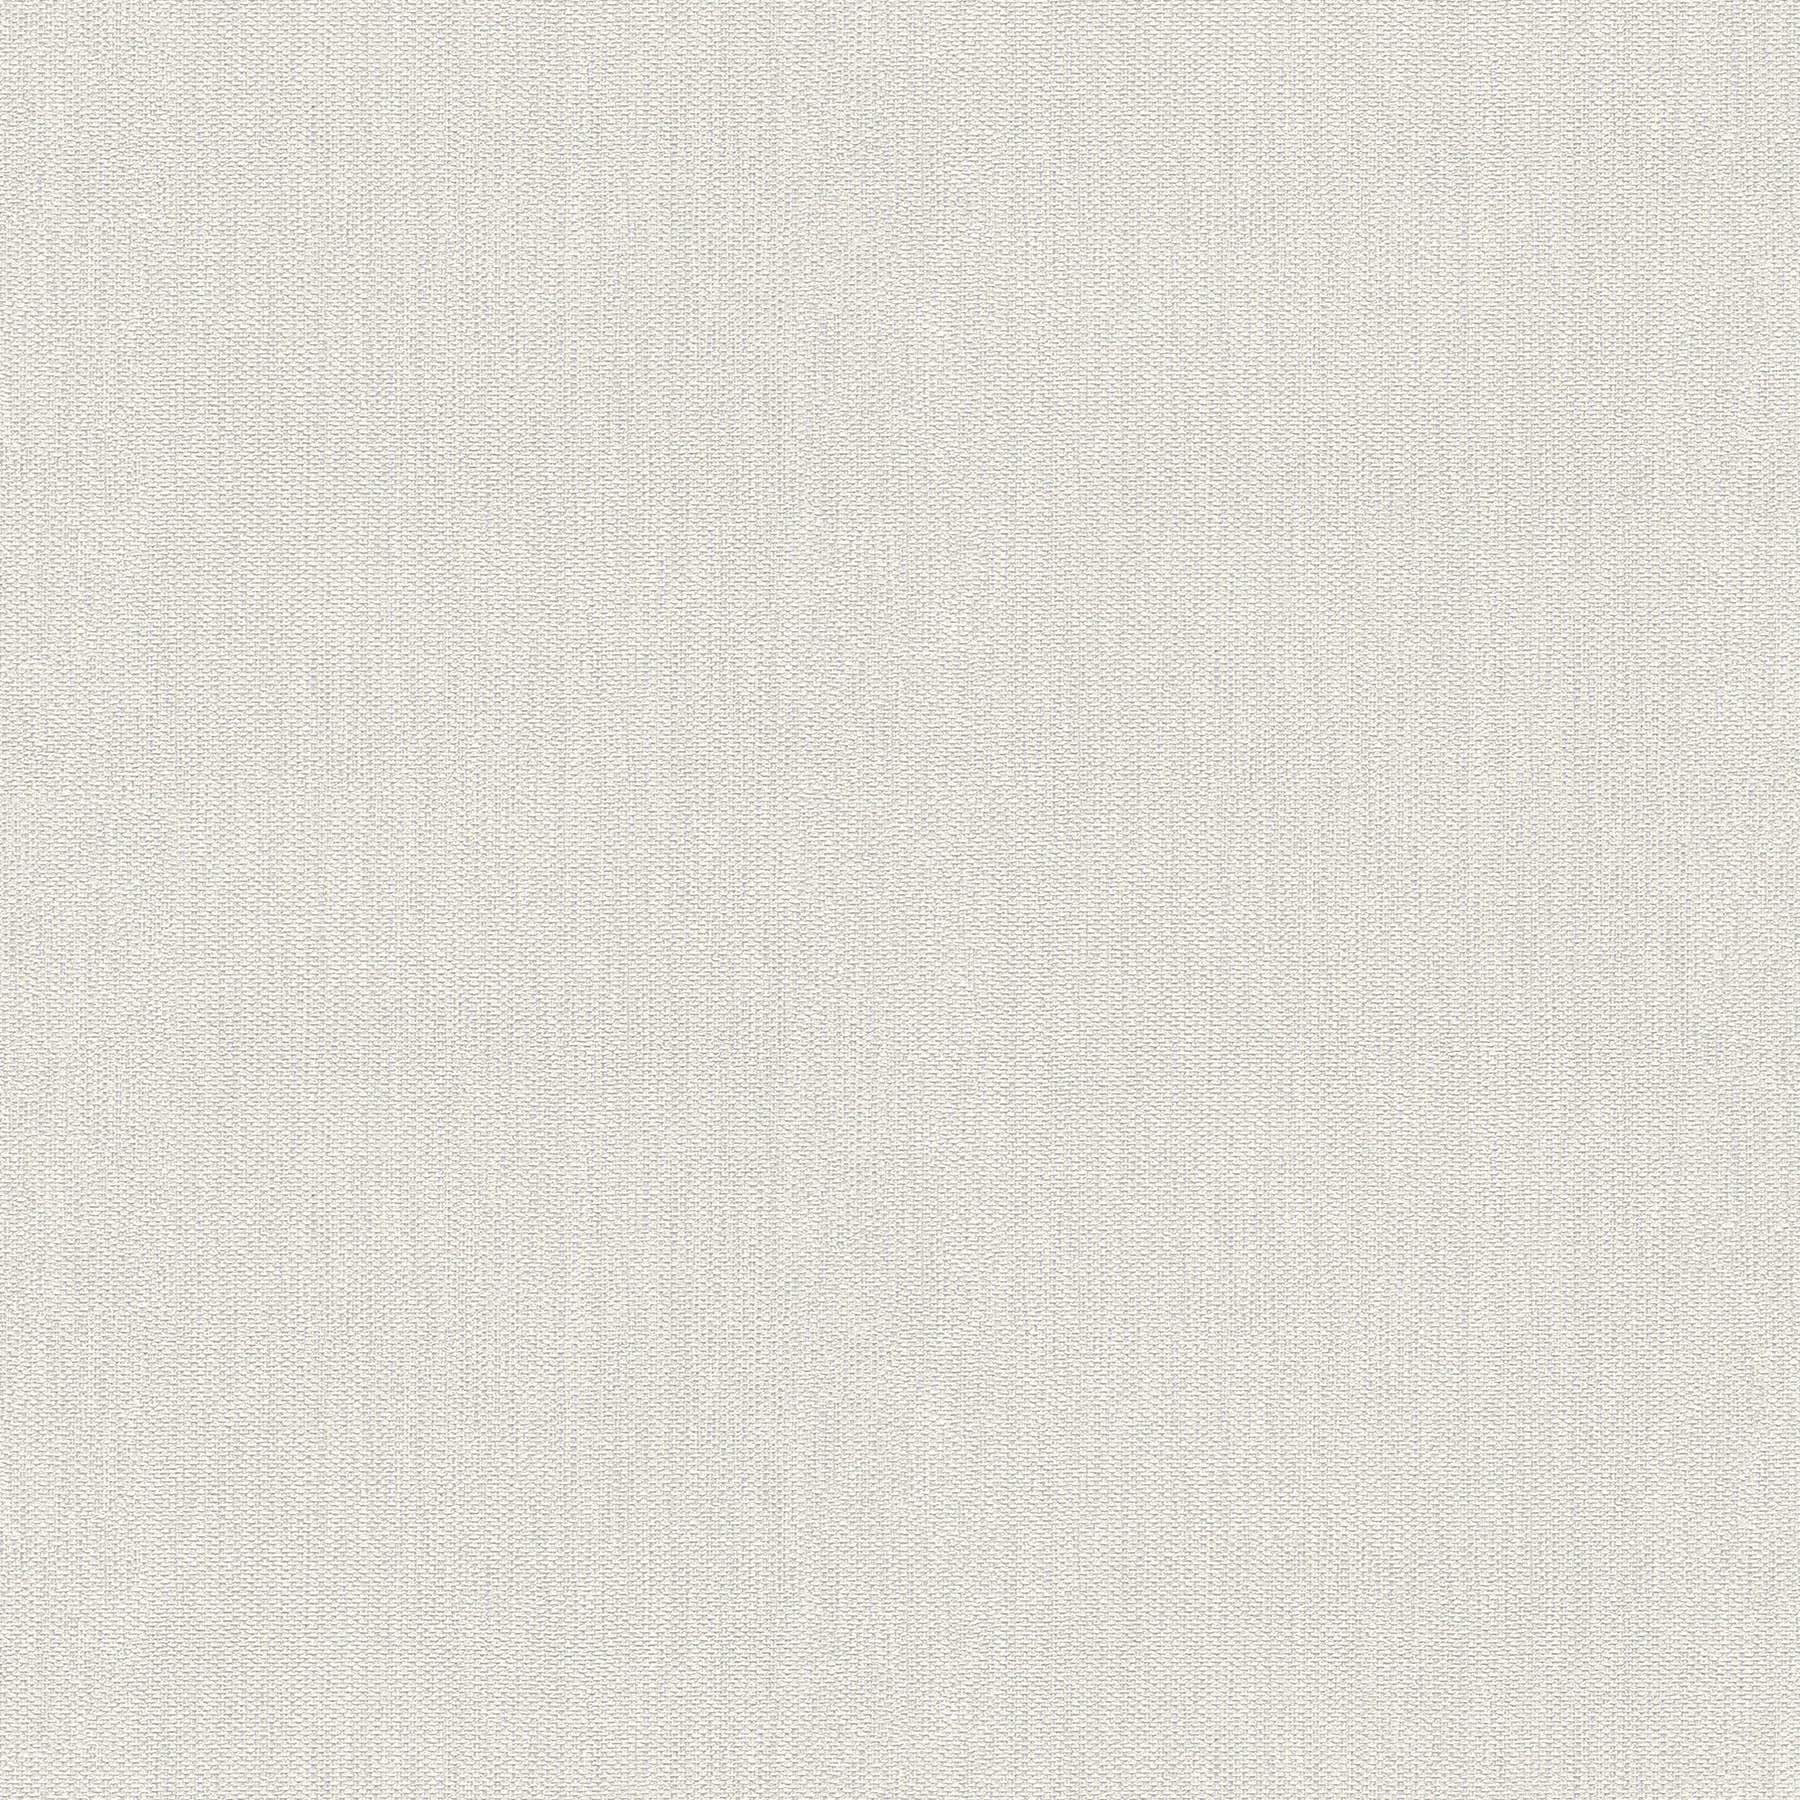 View 4015-3443-11 Beyond Textures Cahaya White Woven White by Advantage